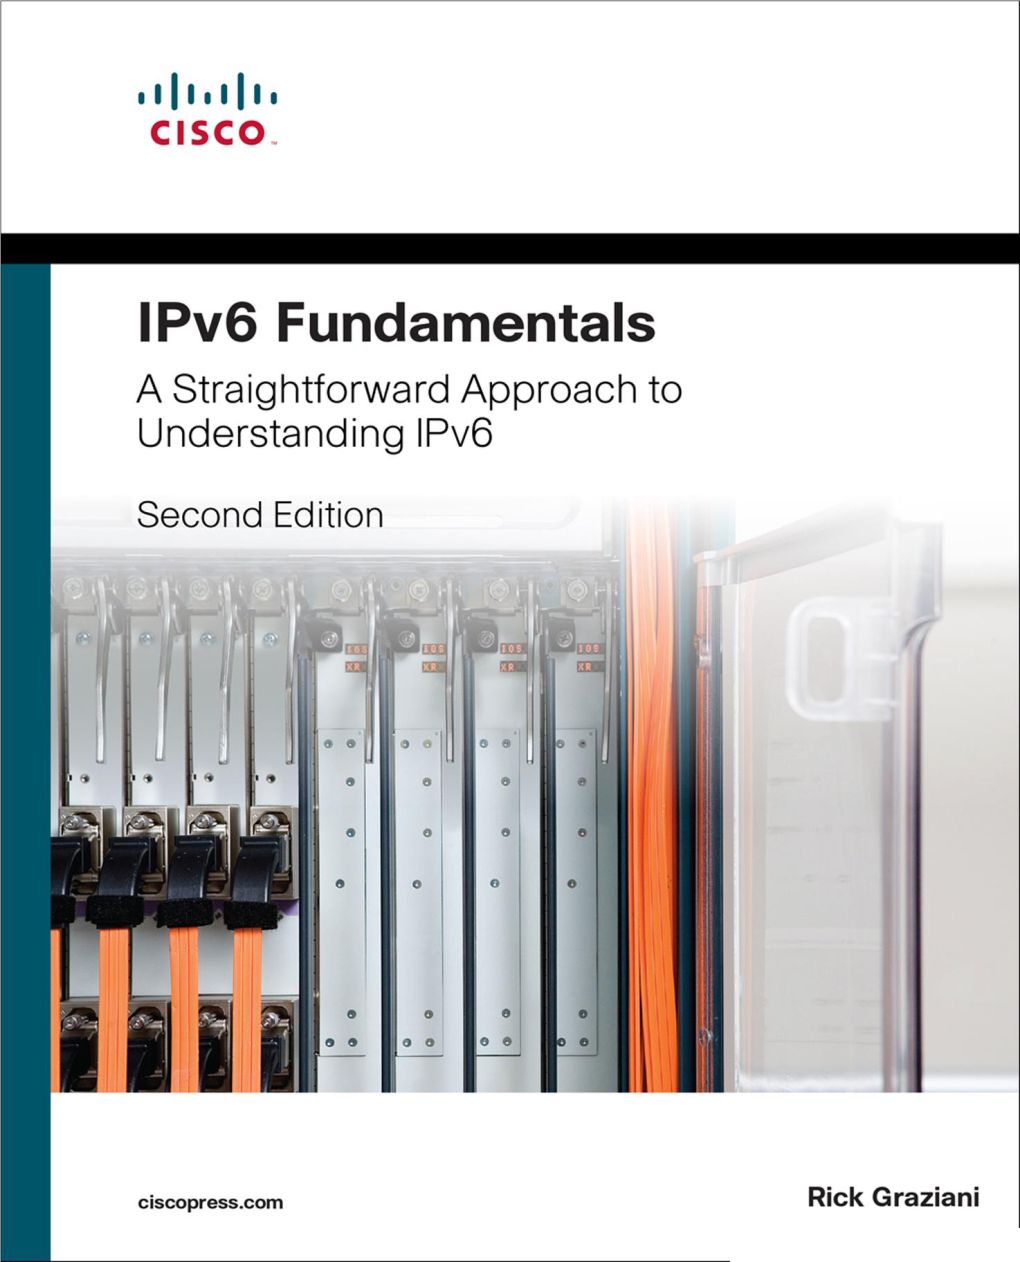 Ipv6 Fundamentals: a Straightforward Approach to Understanding Ipv6, Second Edition Rick Graziani Copyright © 2017 Cisco Systems, Inc